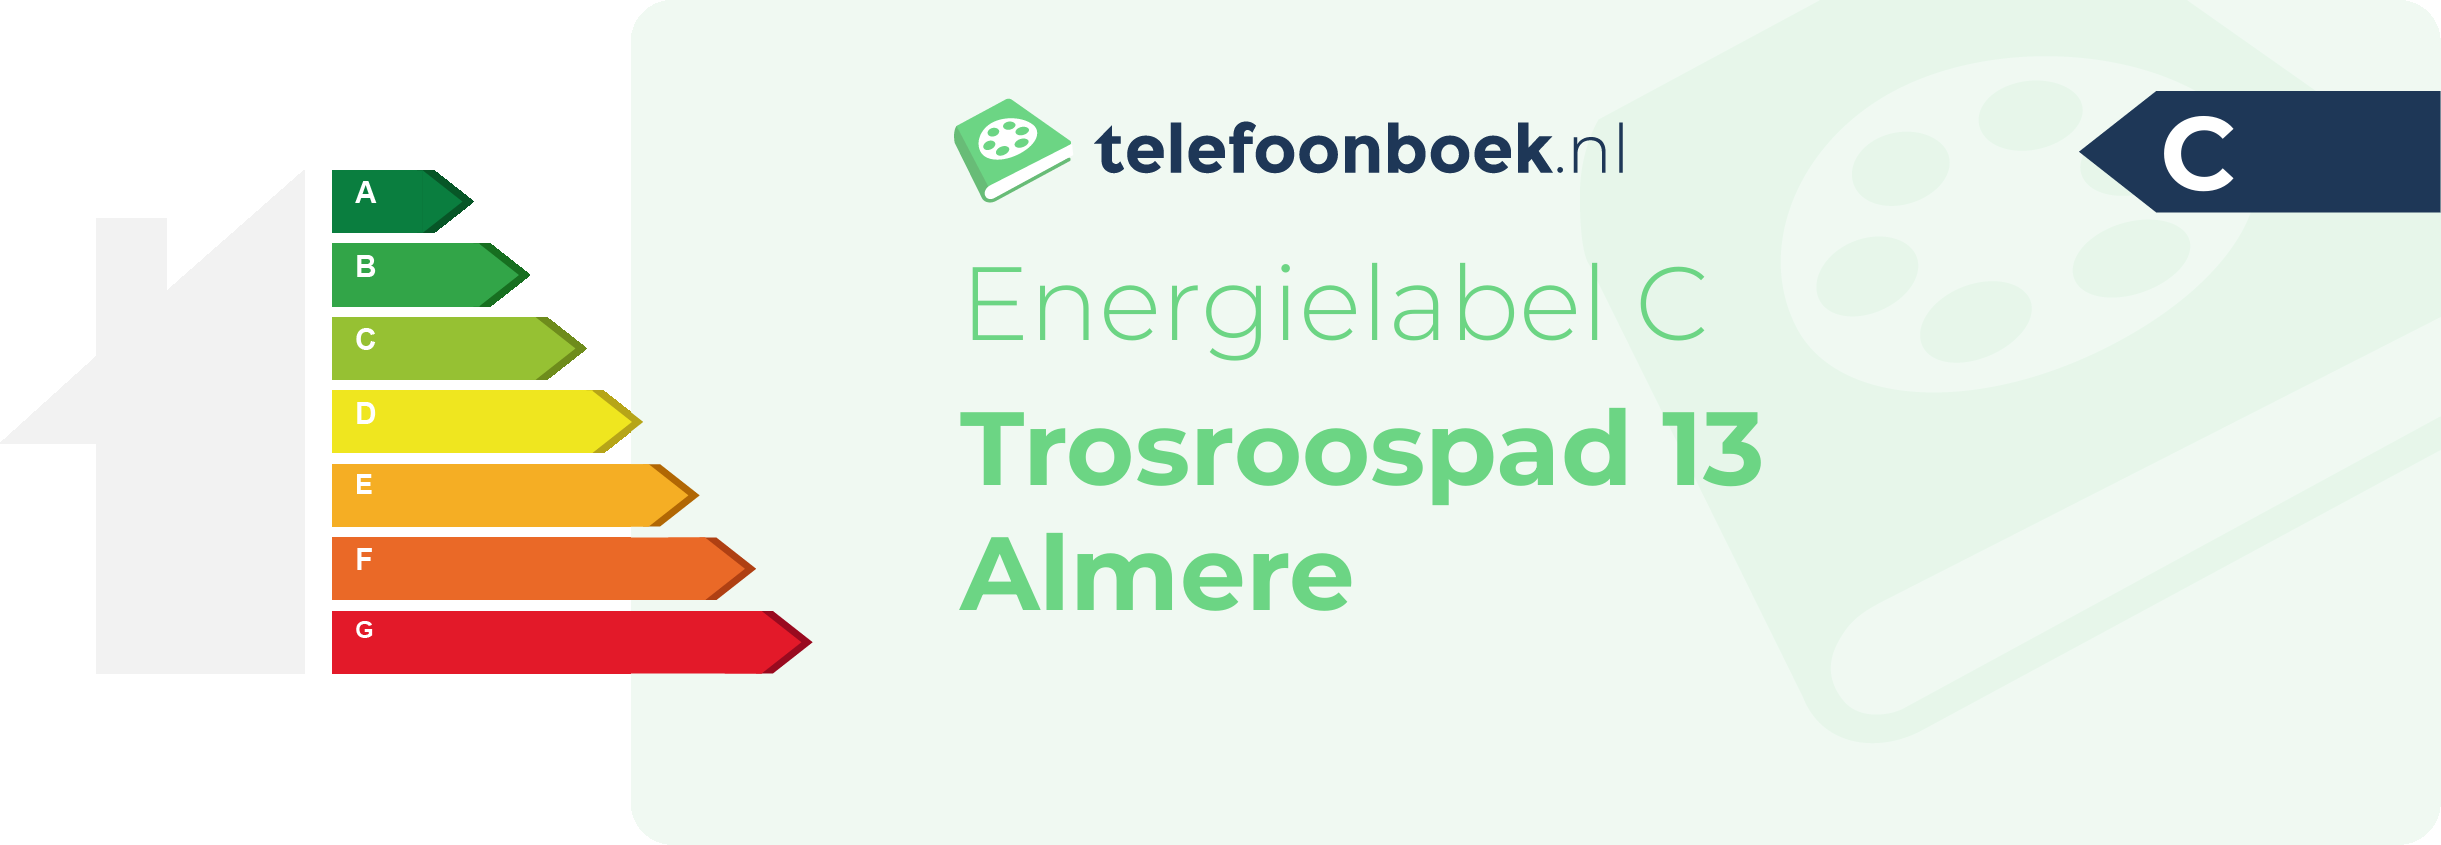 Energielabel Trosroospad 13 Almere